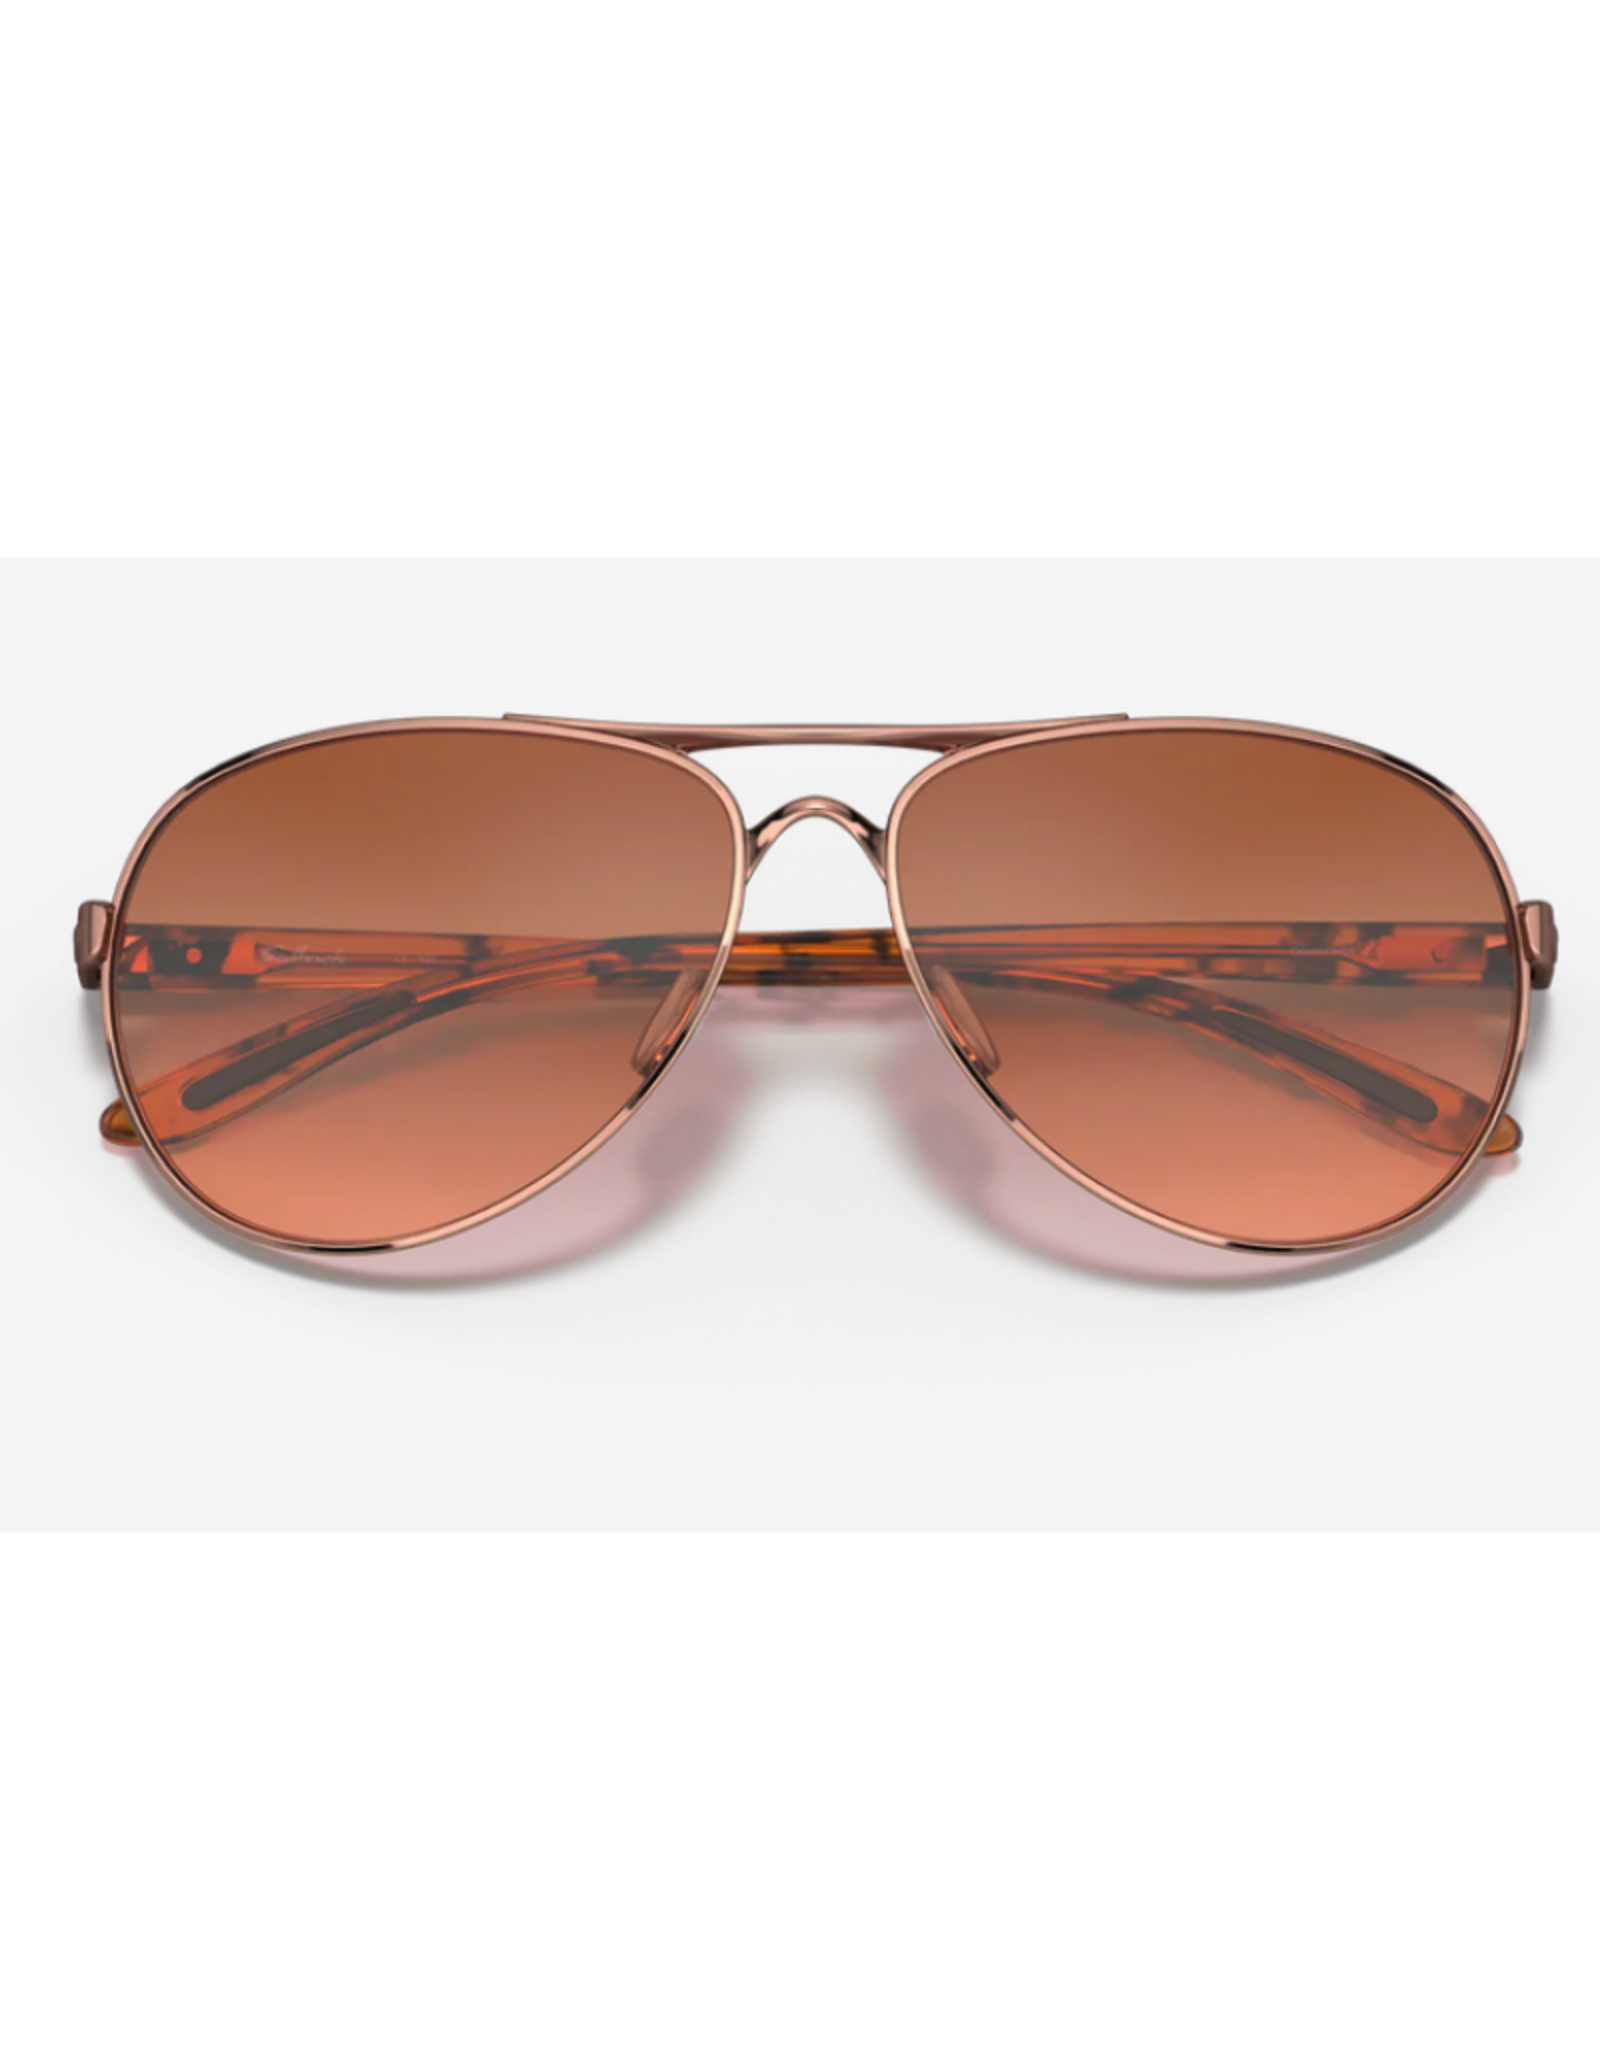 Oakley Feedback VR50 Brown Gradient Lenses Rose Gold Frame Sunglasses